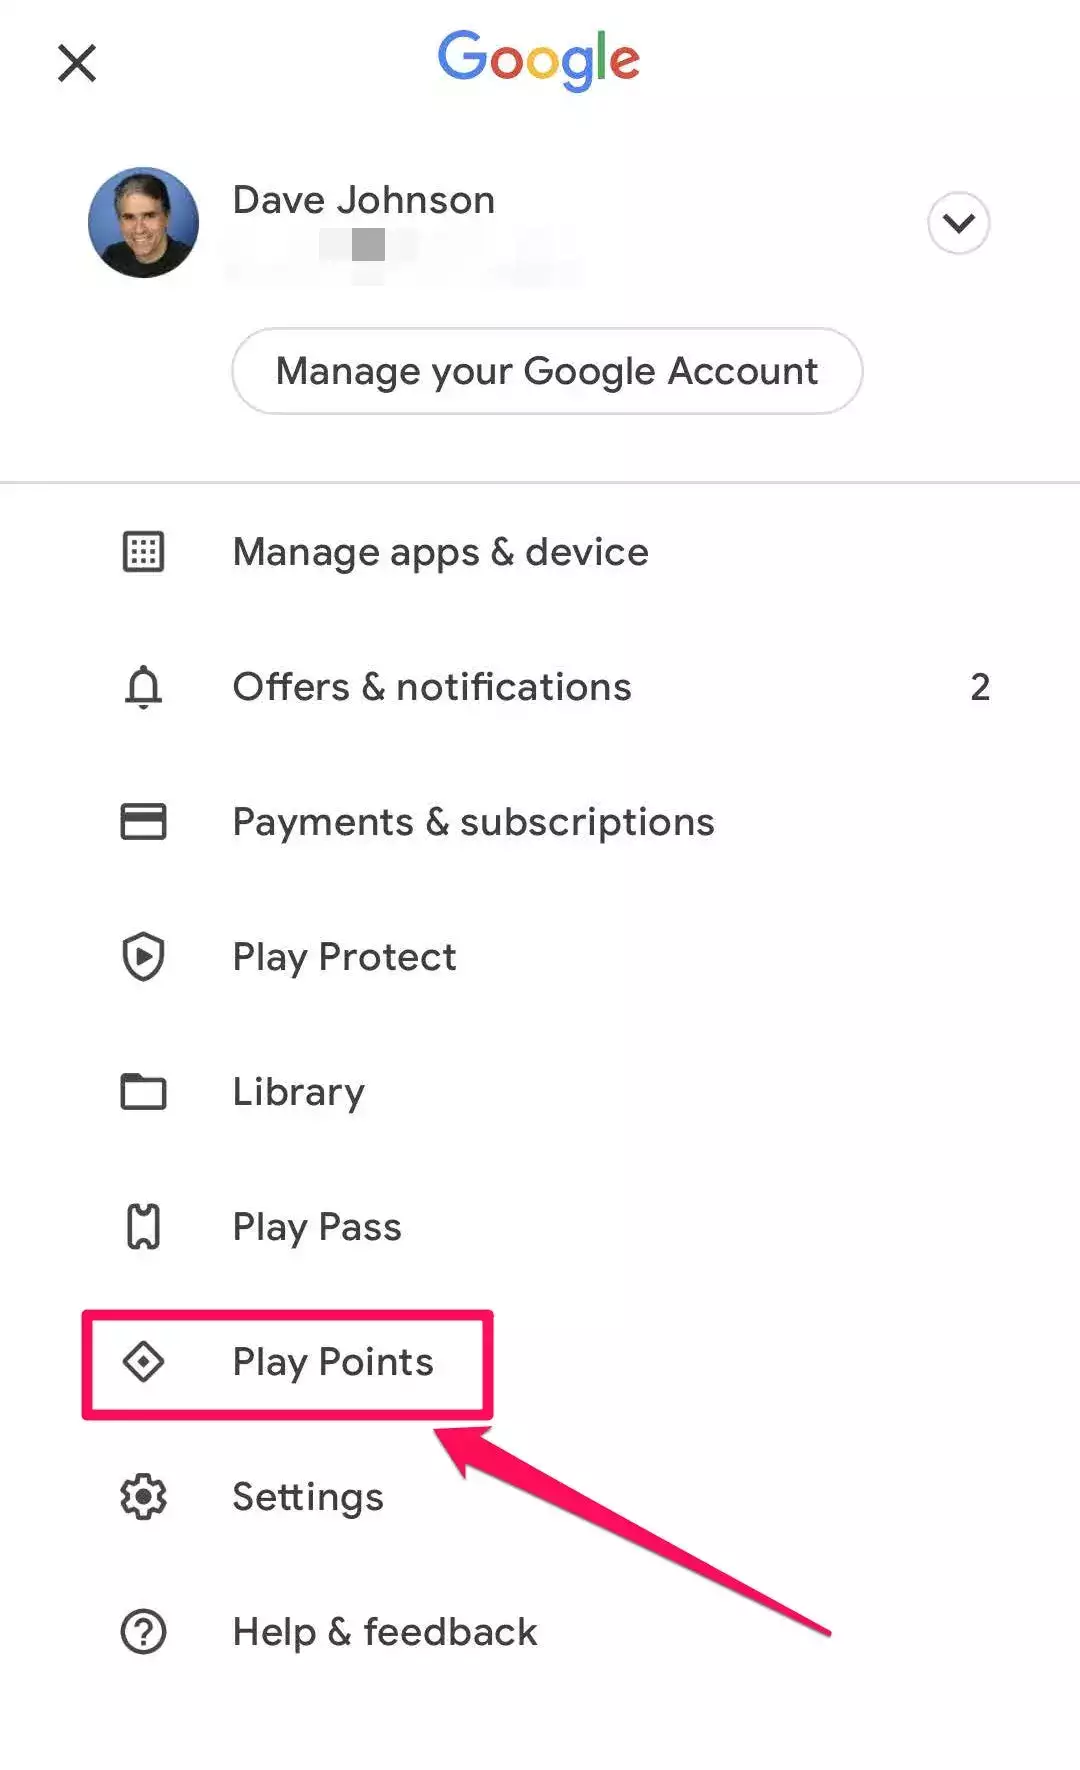 Google Play Points：如何注册应用商店的奖励计划并兑换积分